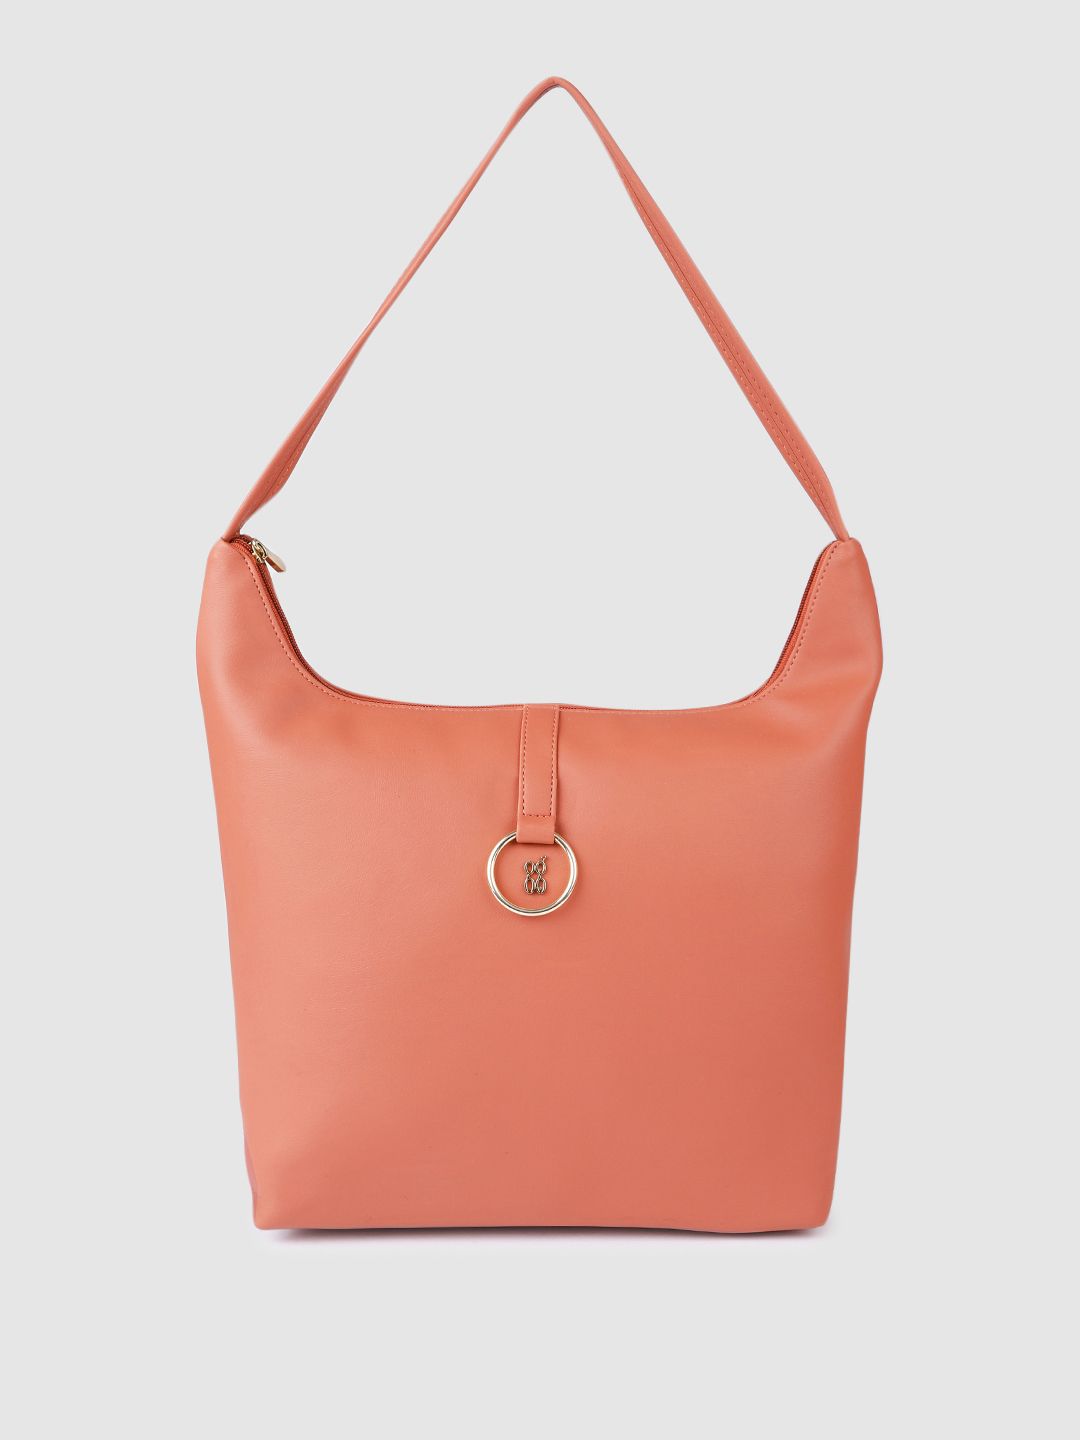 Baggit Pink Solid Structured Shoulder Bag Price in India